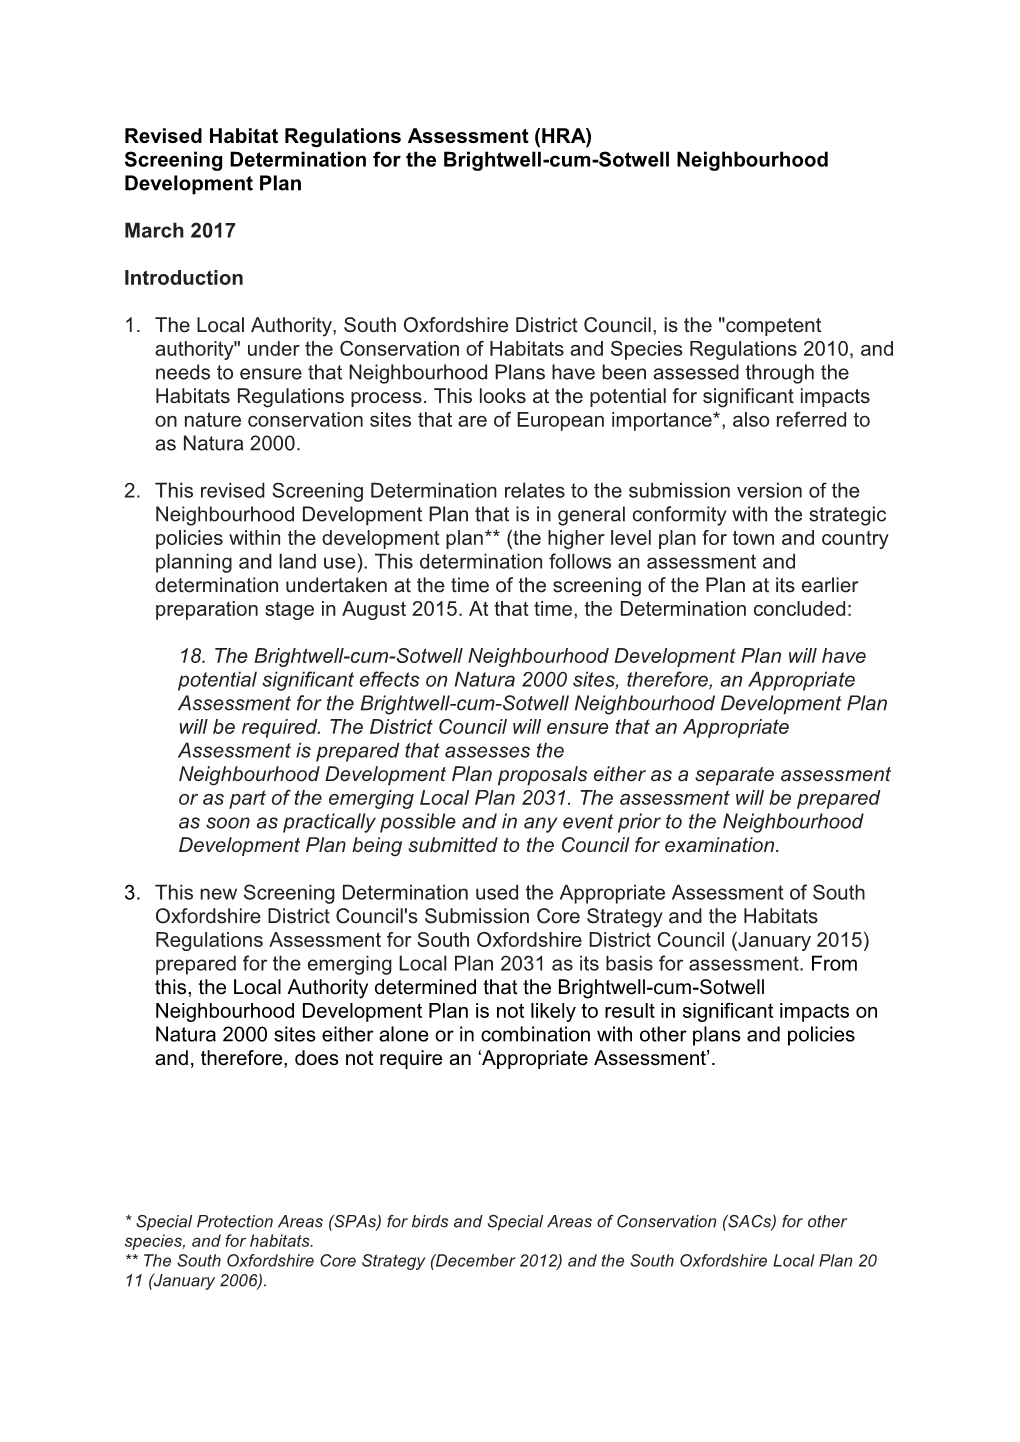 Revised Habitat Regulations Assessment (HRA) Screening Determination for the Brightwell-Cum-Sotwell Neighbourhood Development Plan